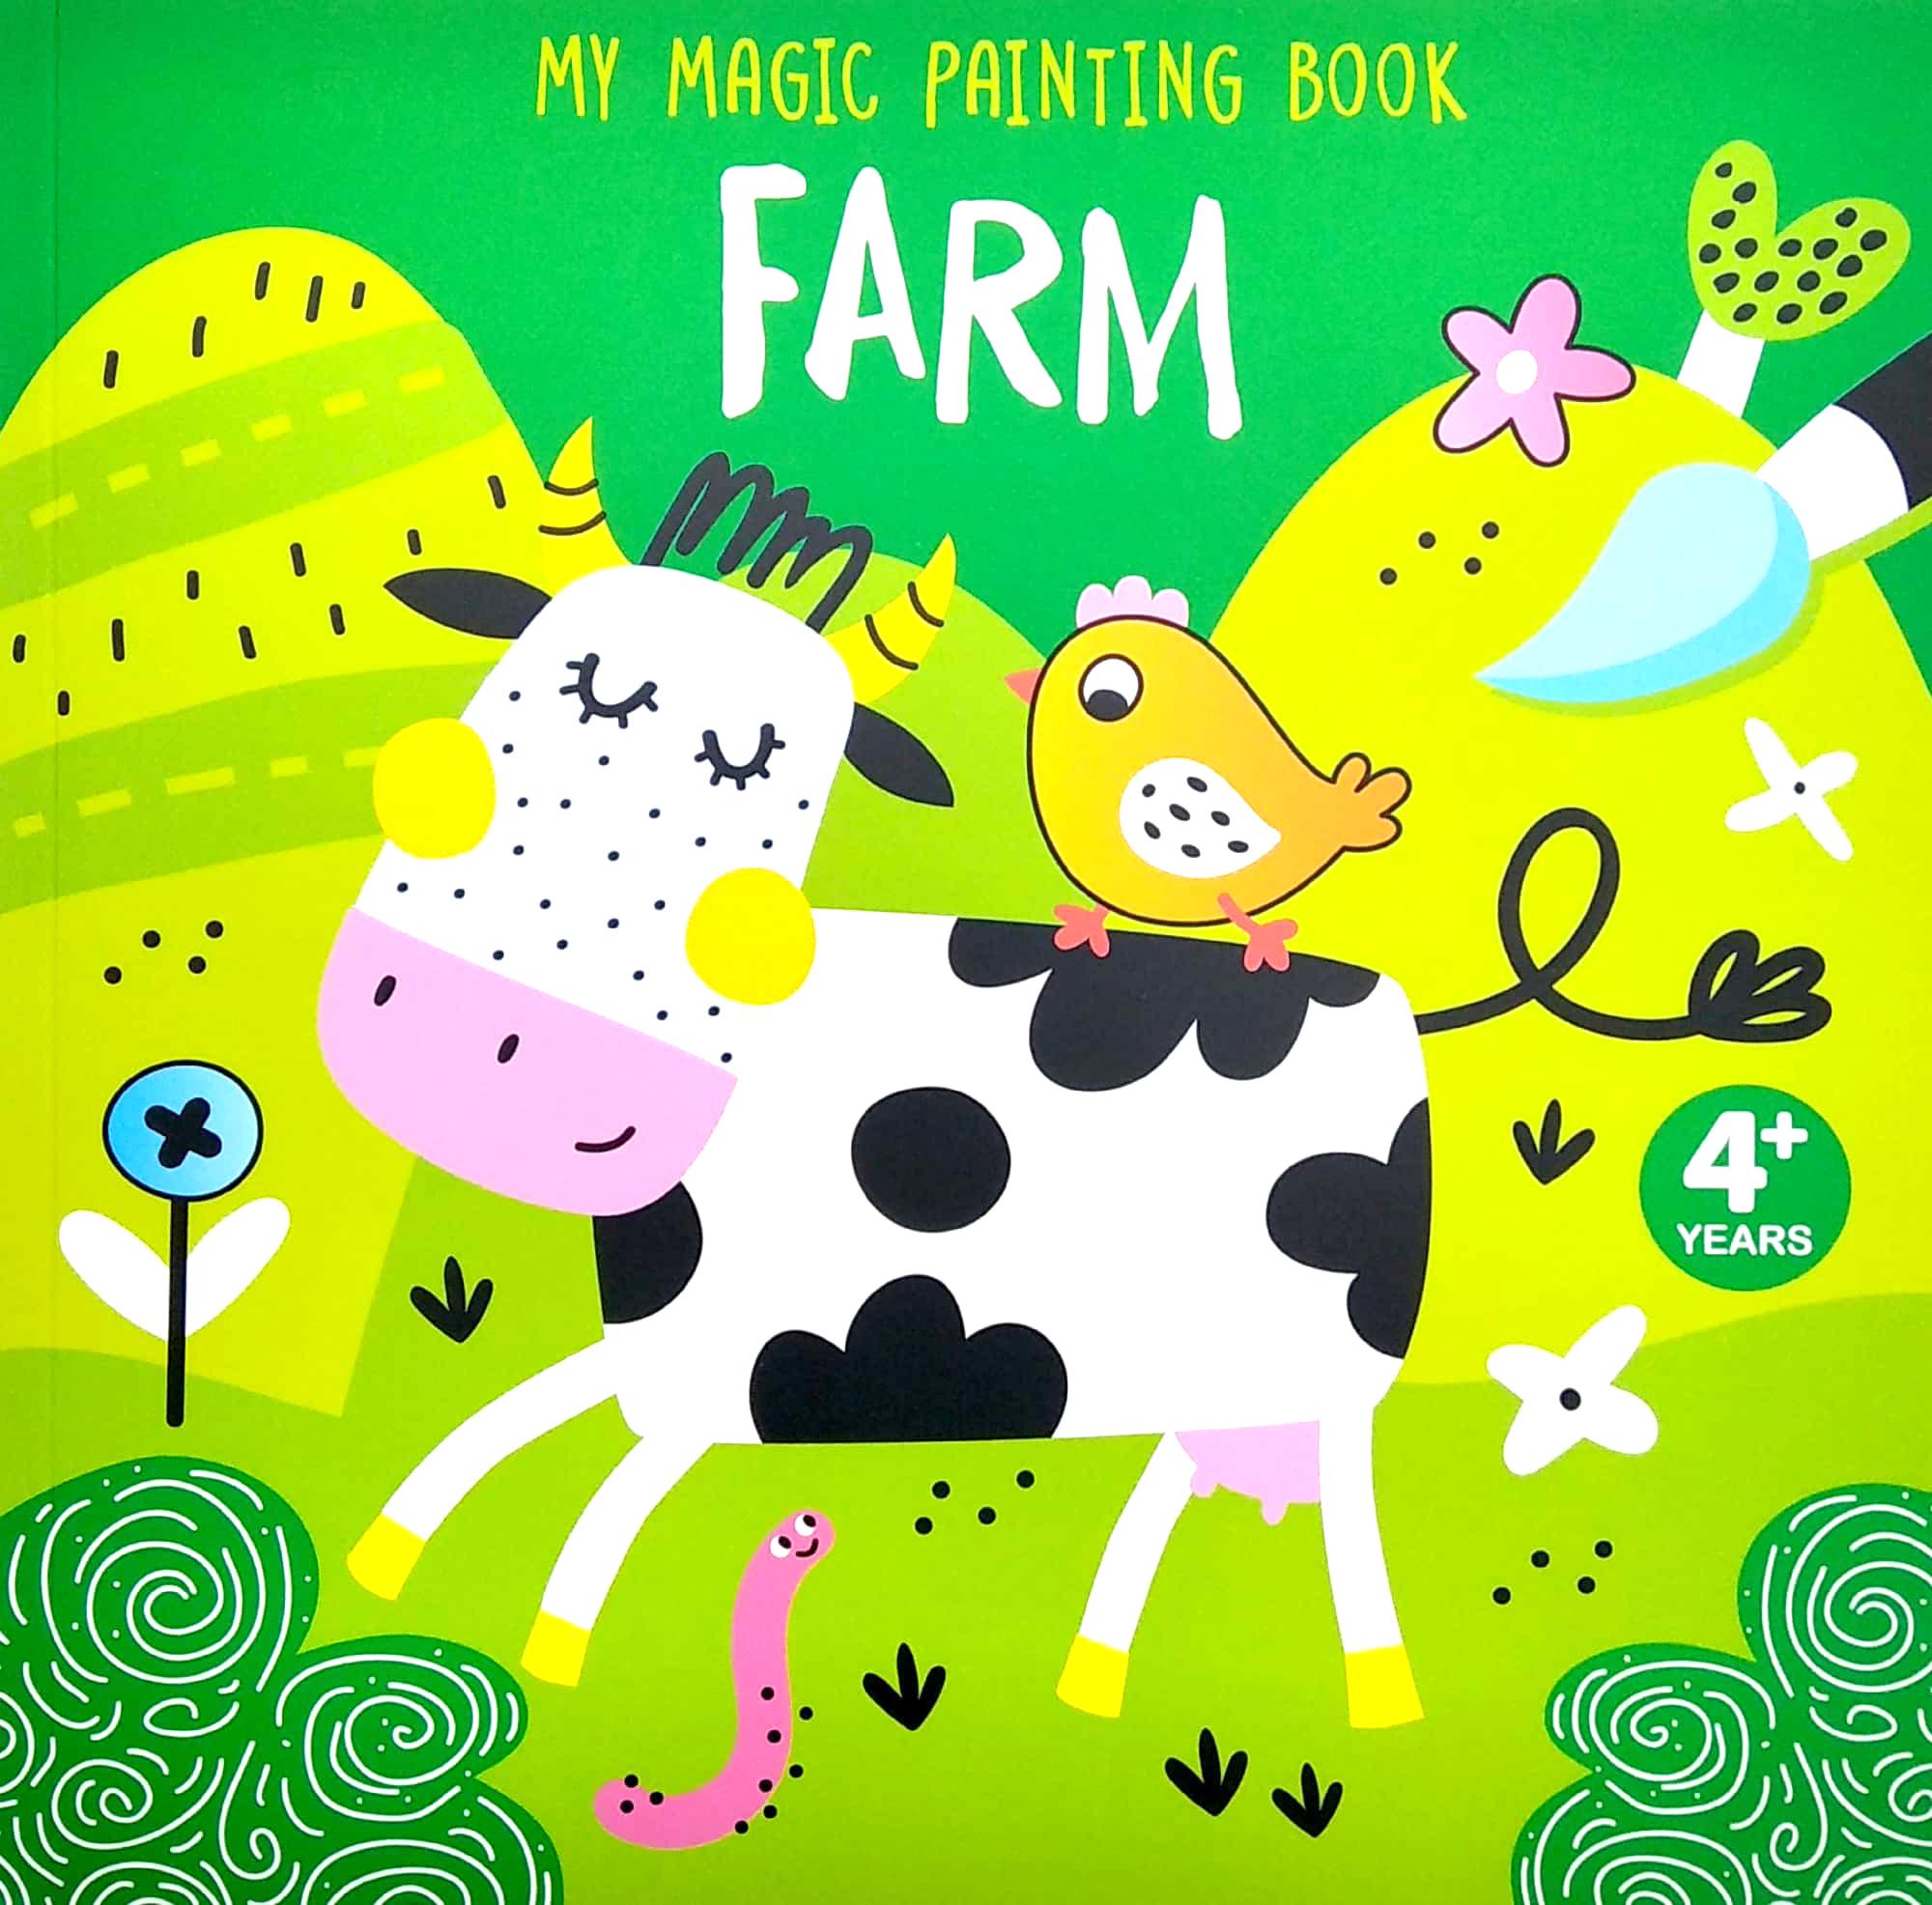 My Magic Painting Book: Farm